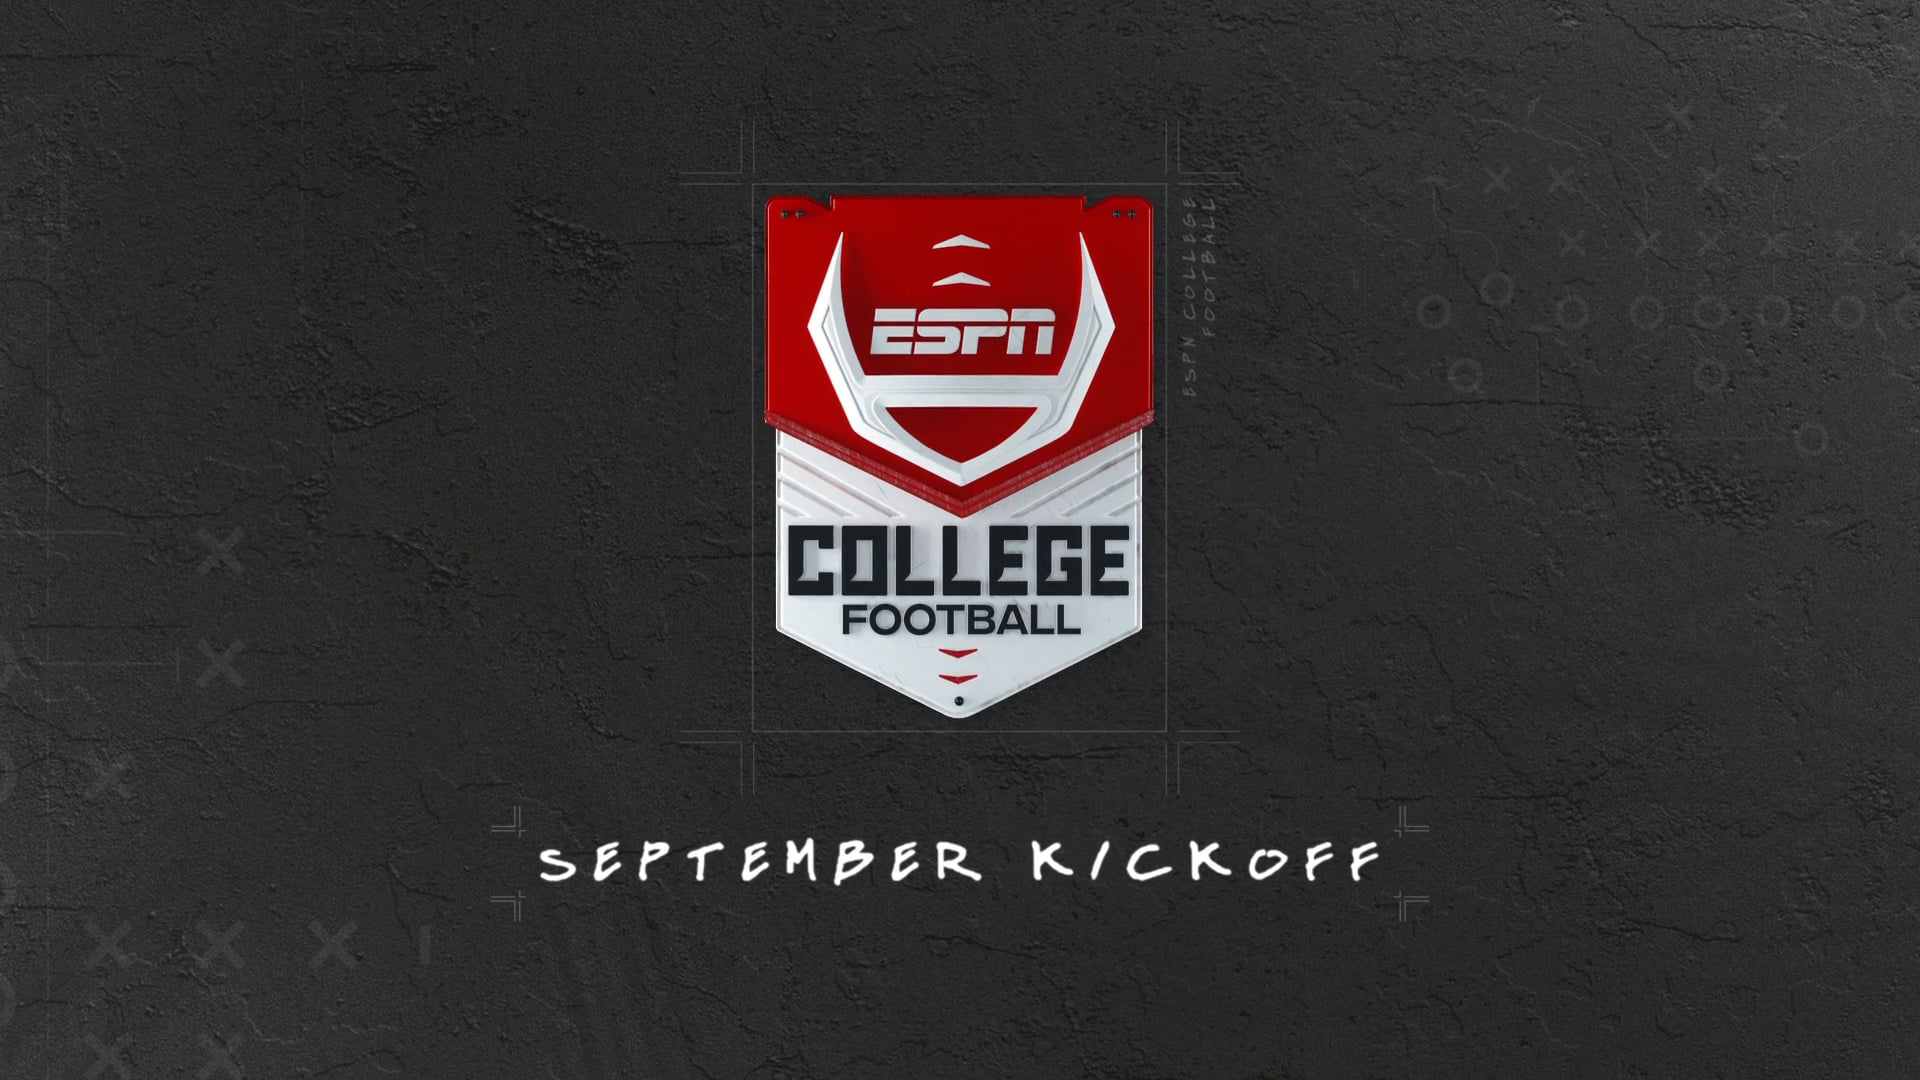 ESPN - 2020 College Football Promotion